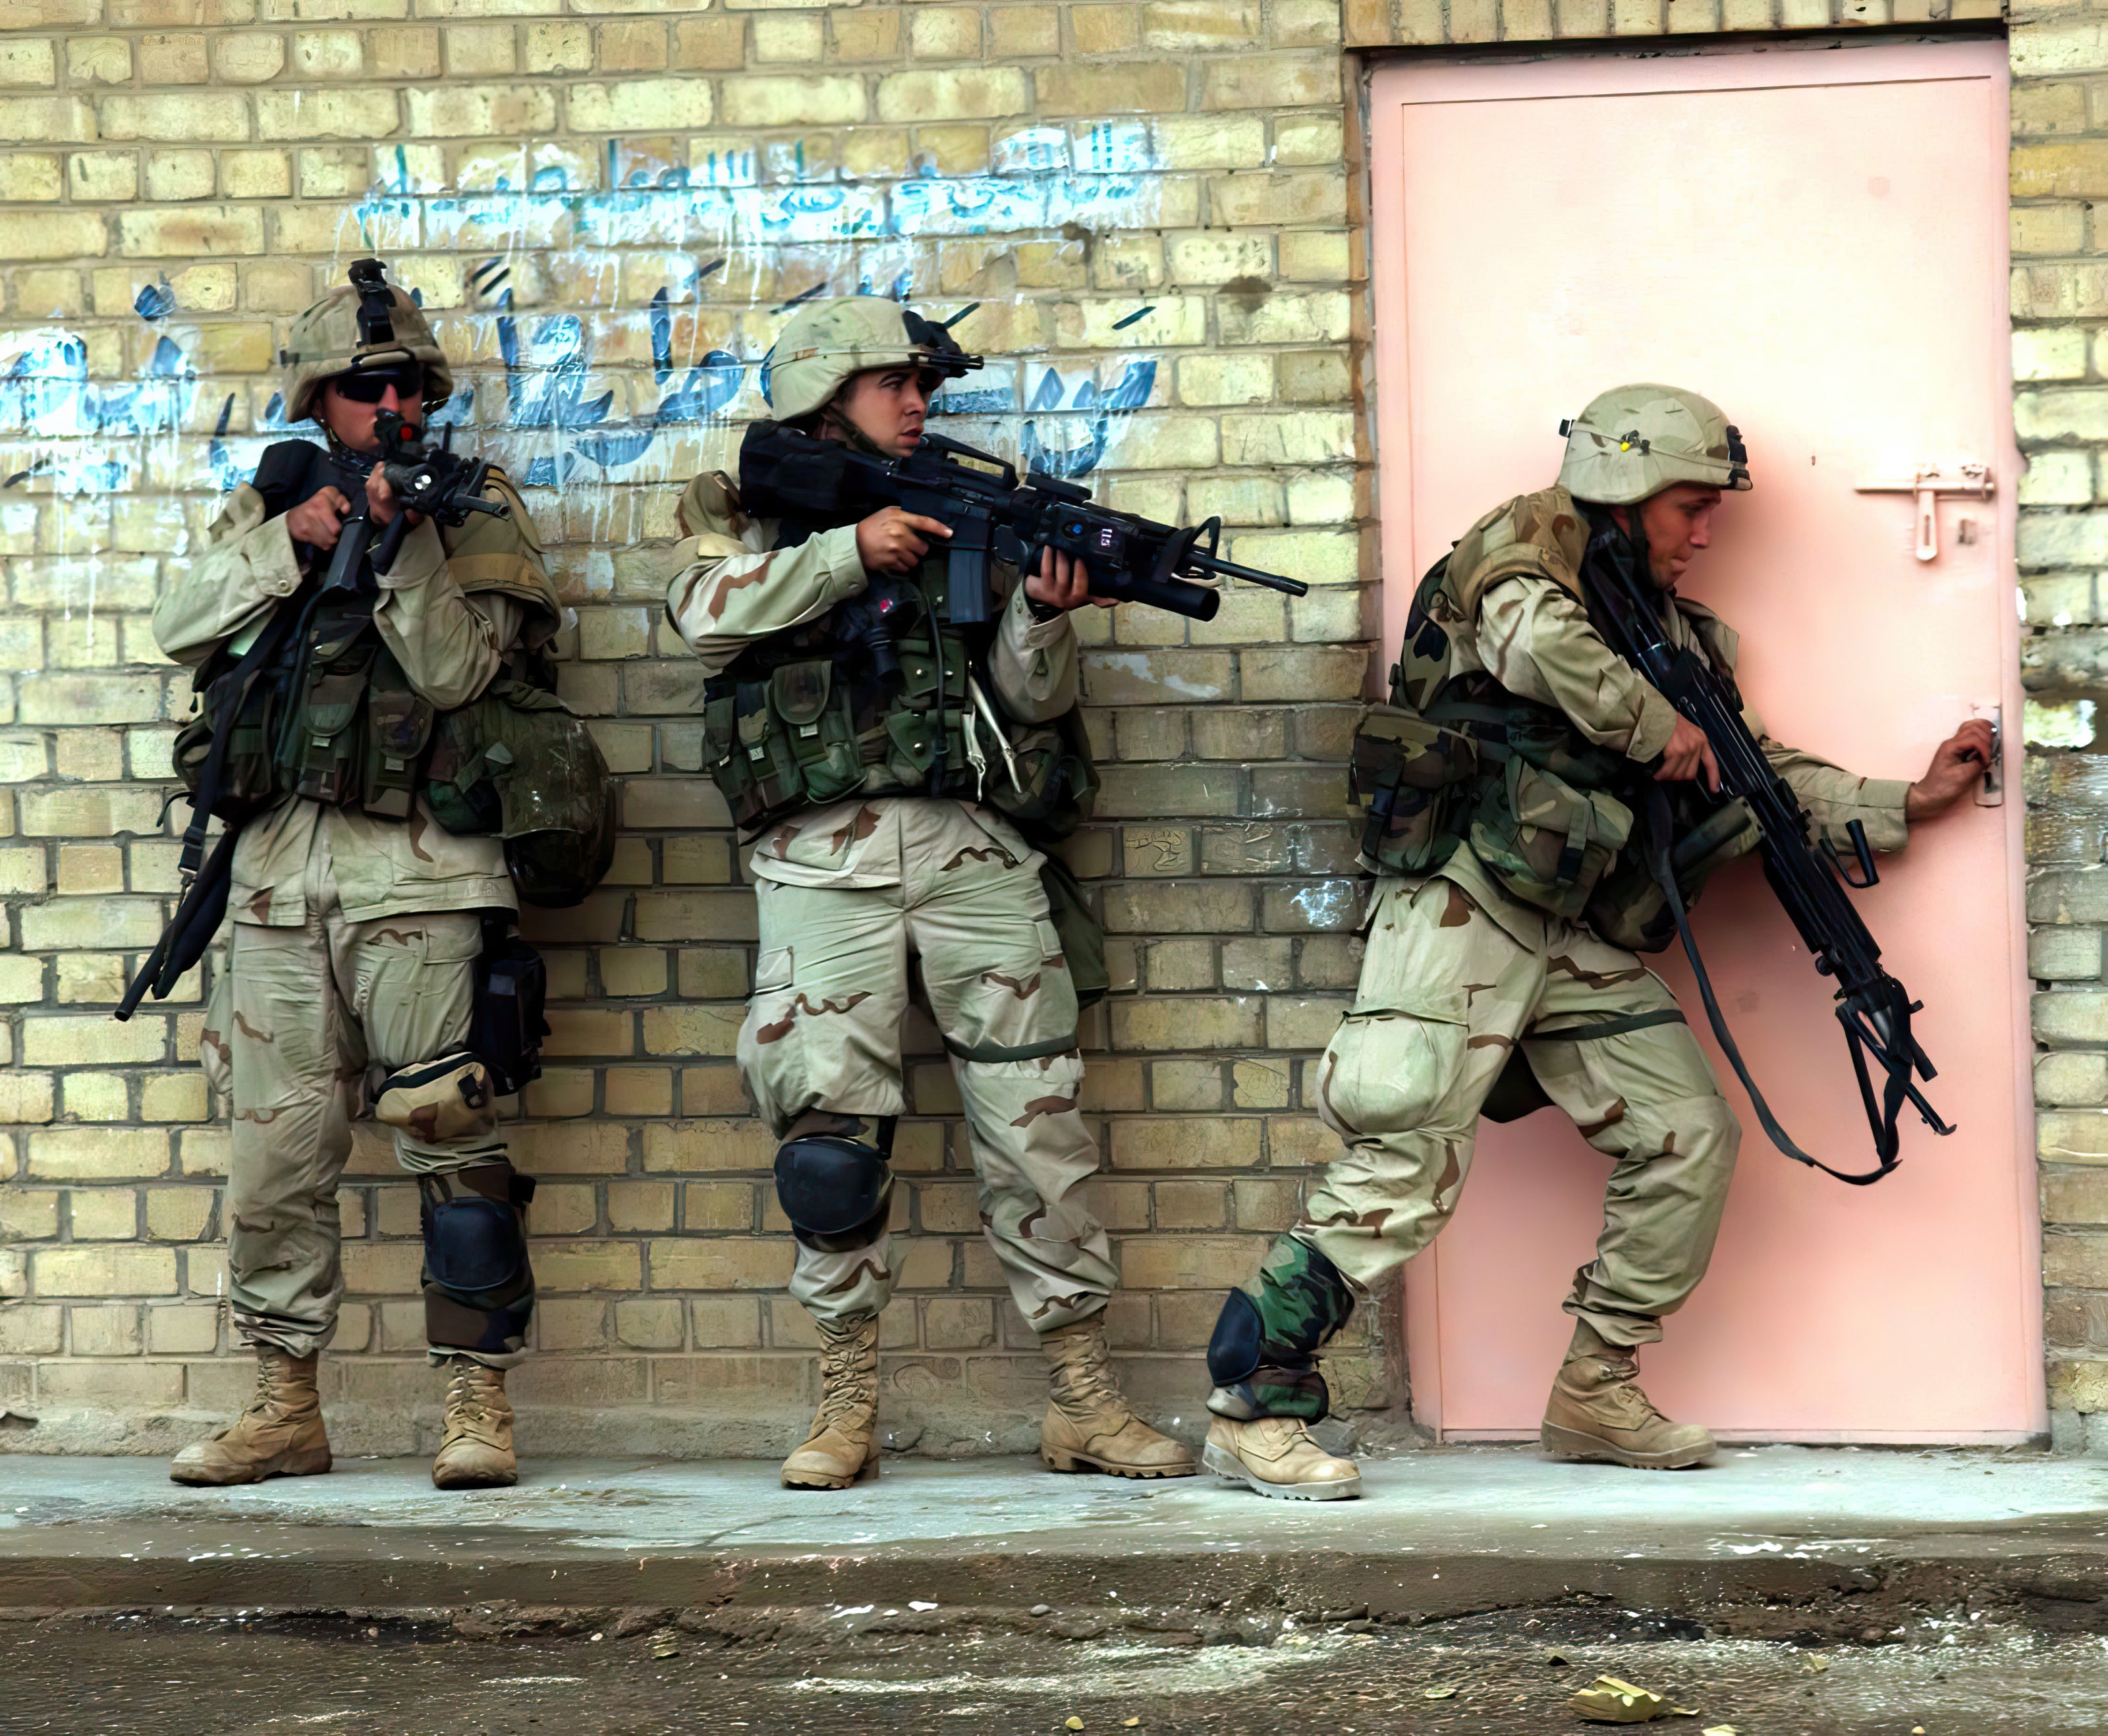 Battlefield Fallujah: The Book "Operation Phantom Fury" - Image from the battle